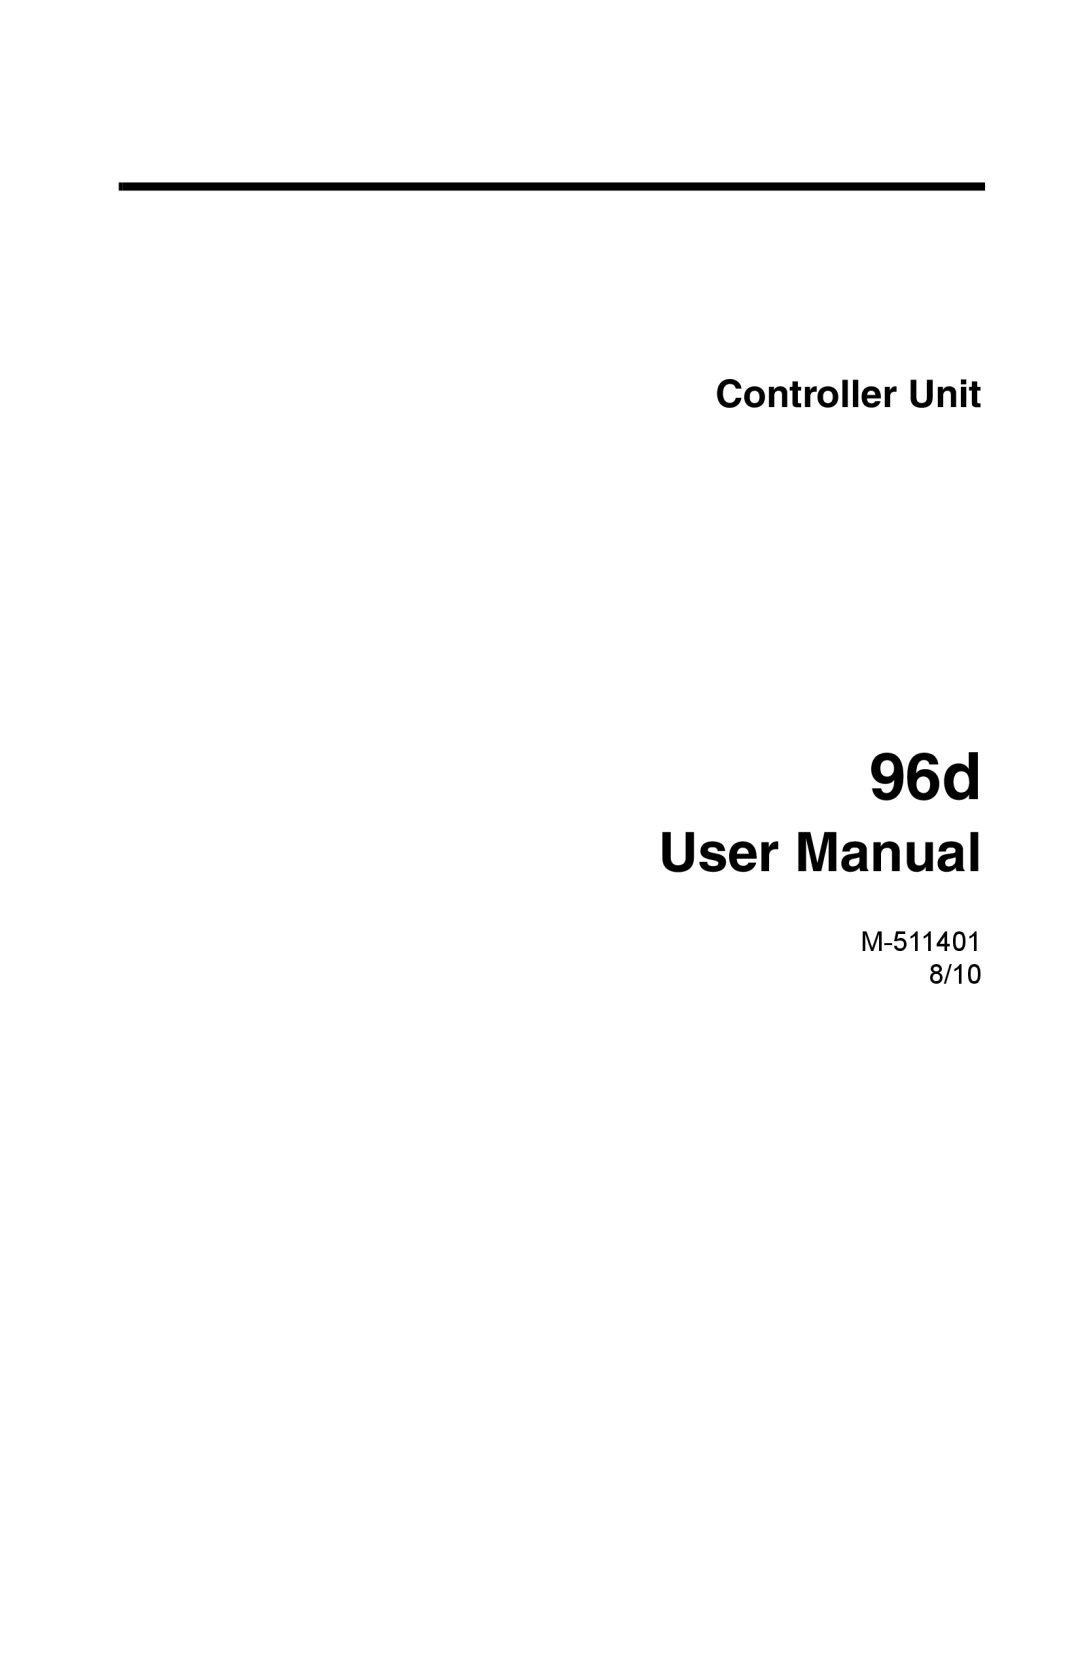 Honeywell 96D user manual Controller Unit, M-5114018/10 